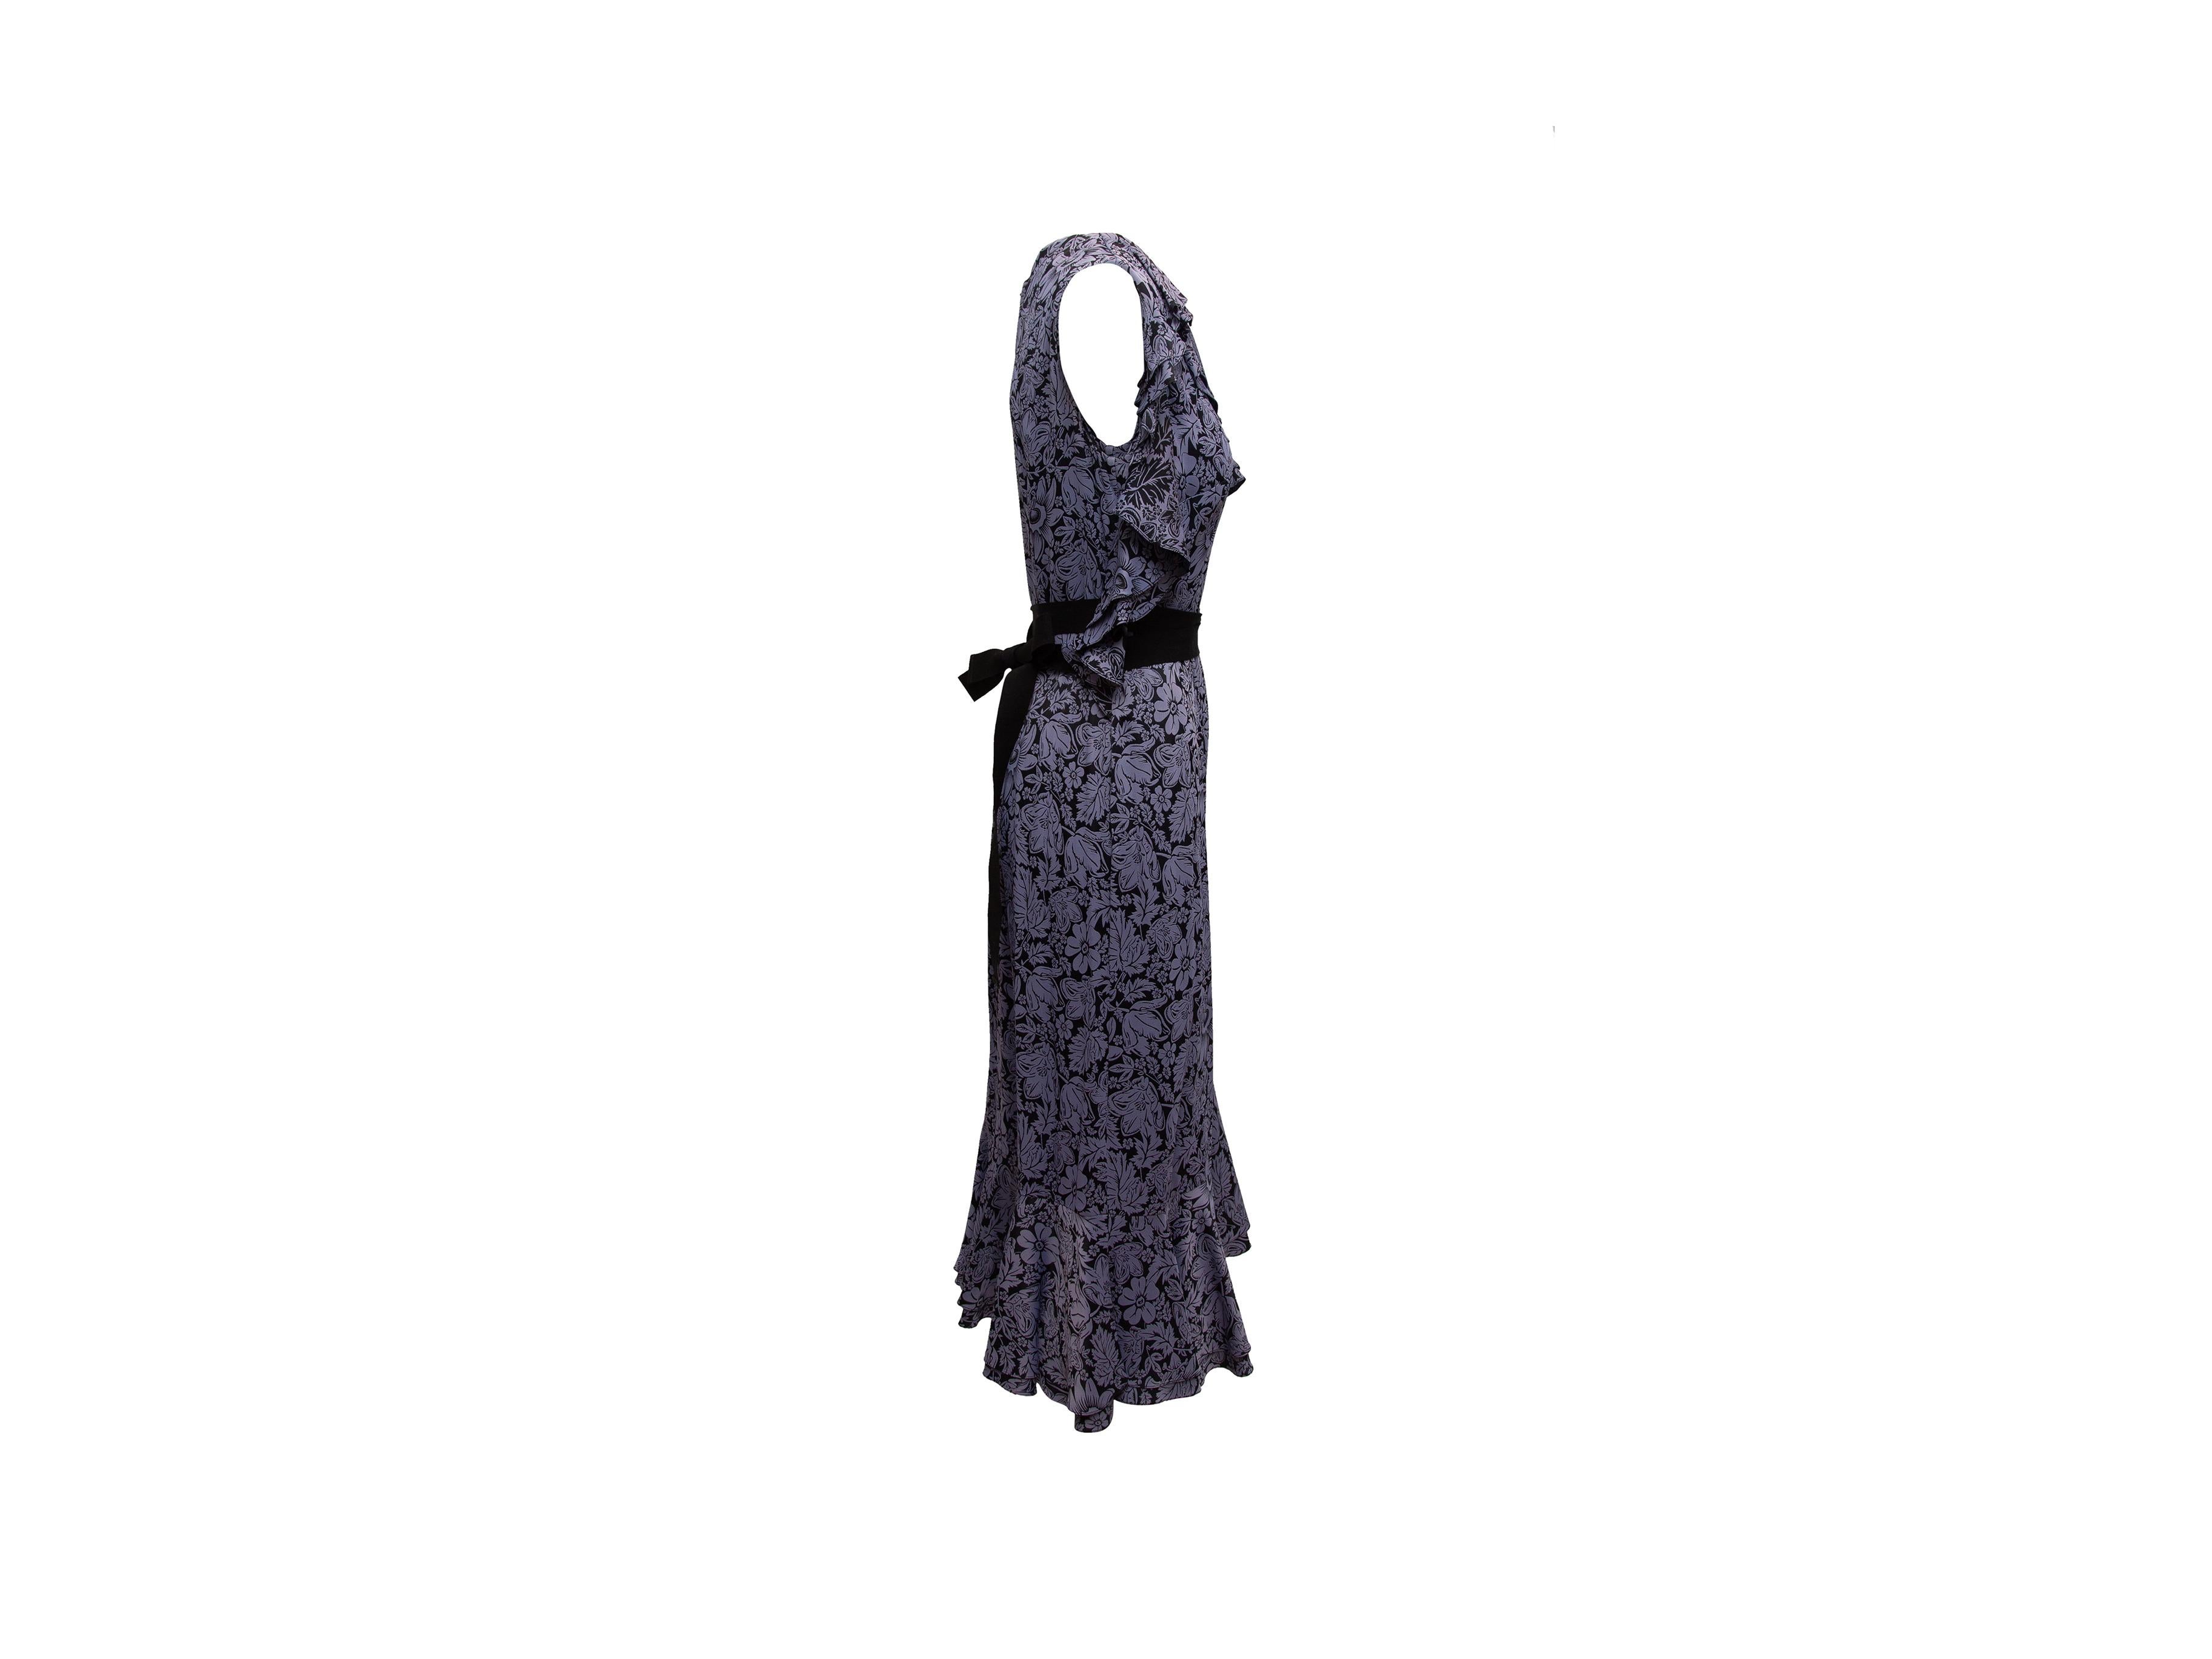 Product details: Purple and black Kayle floral patterned dress by Erdem. Ruffle trim. Black sash tie at waist. 34